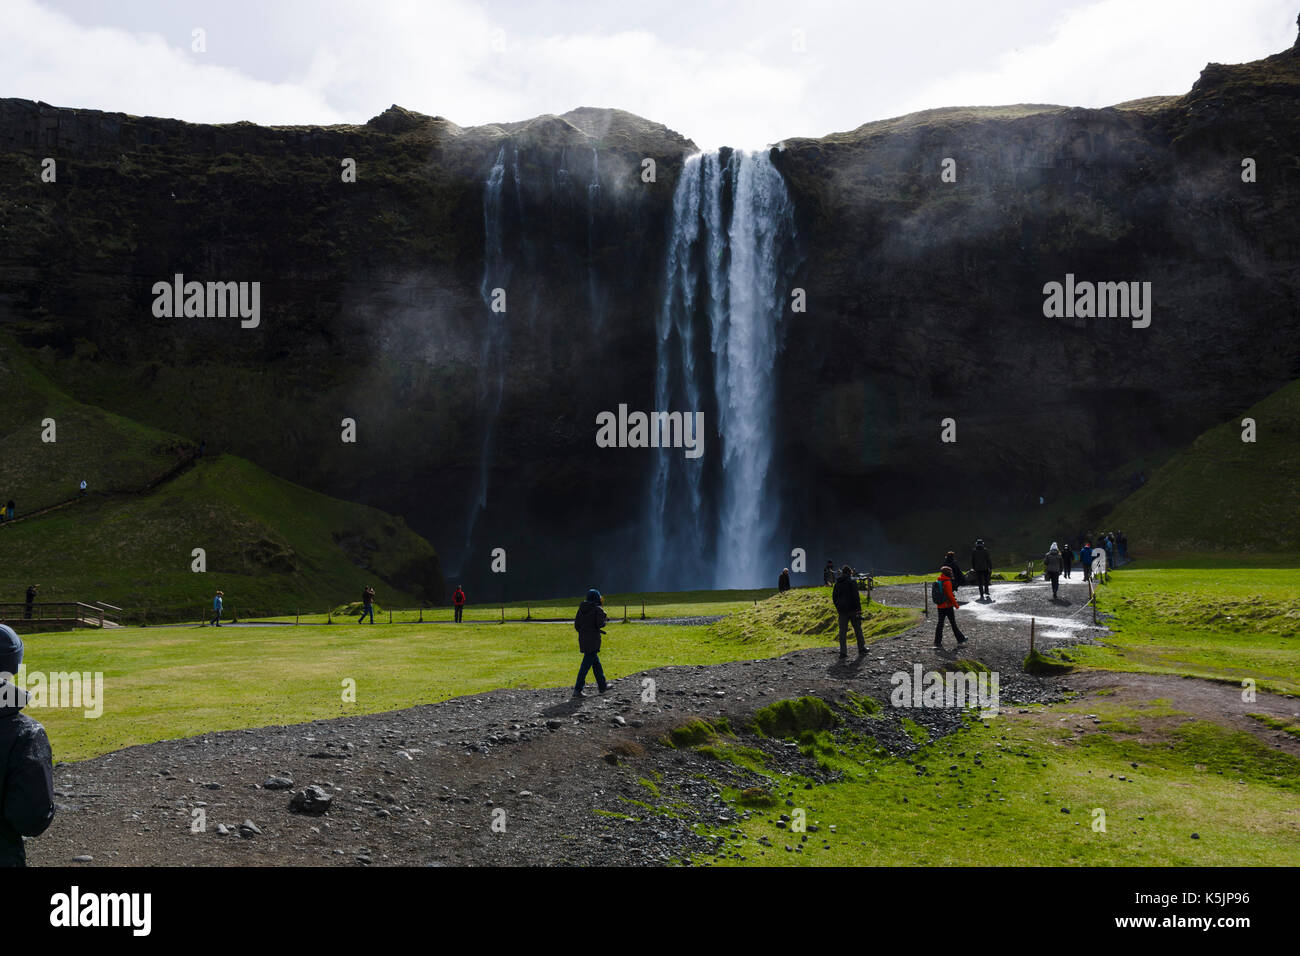 Cascade de seljalandsfoss, Islande Banque D'Images